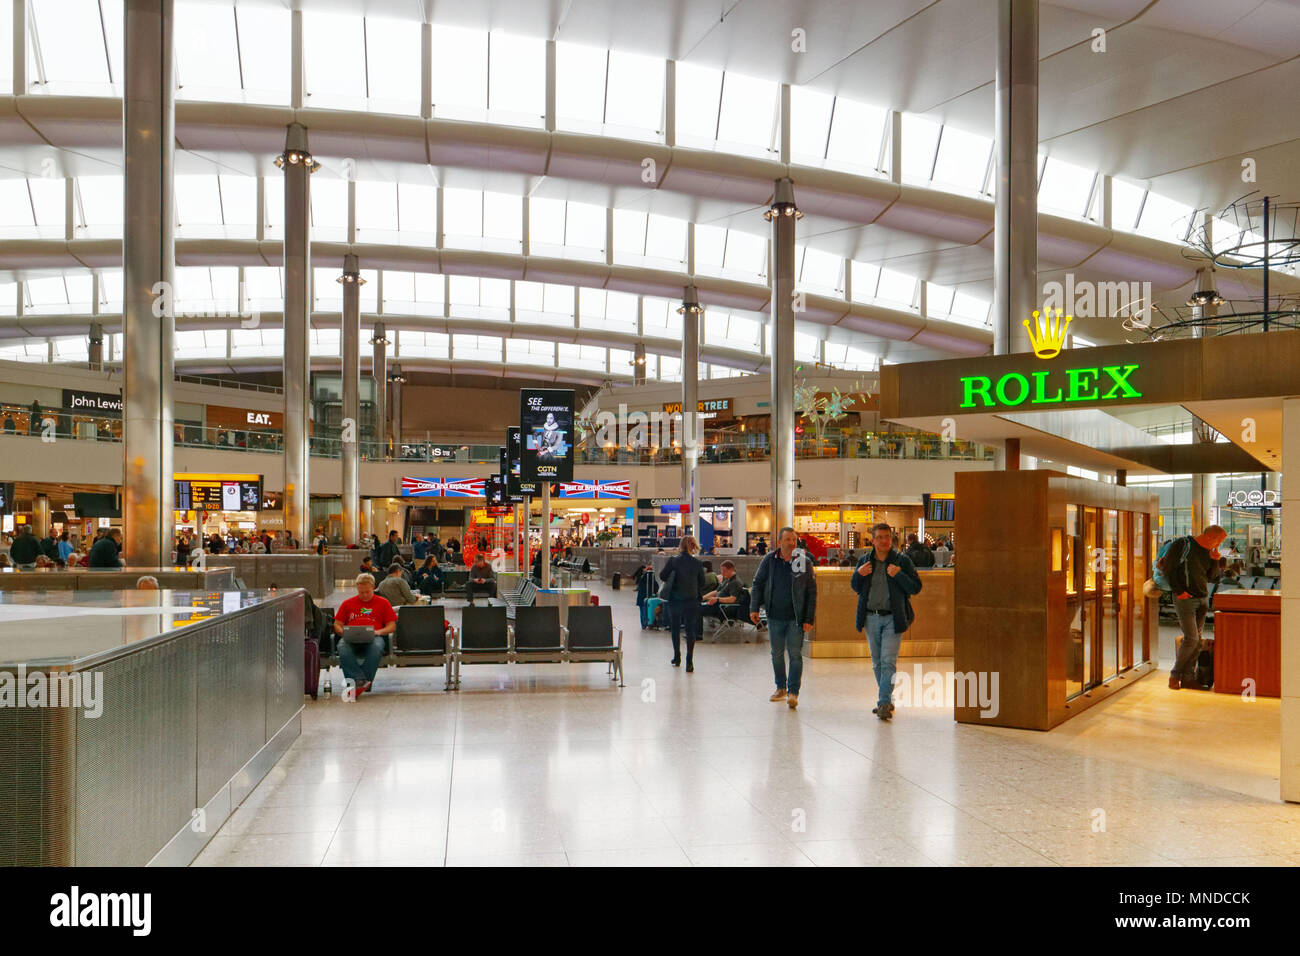 Rolex duty free shop in London Heathrow Airport Terminal 2 Stock Photo